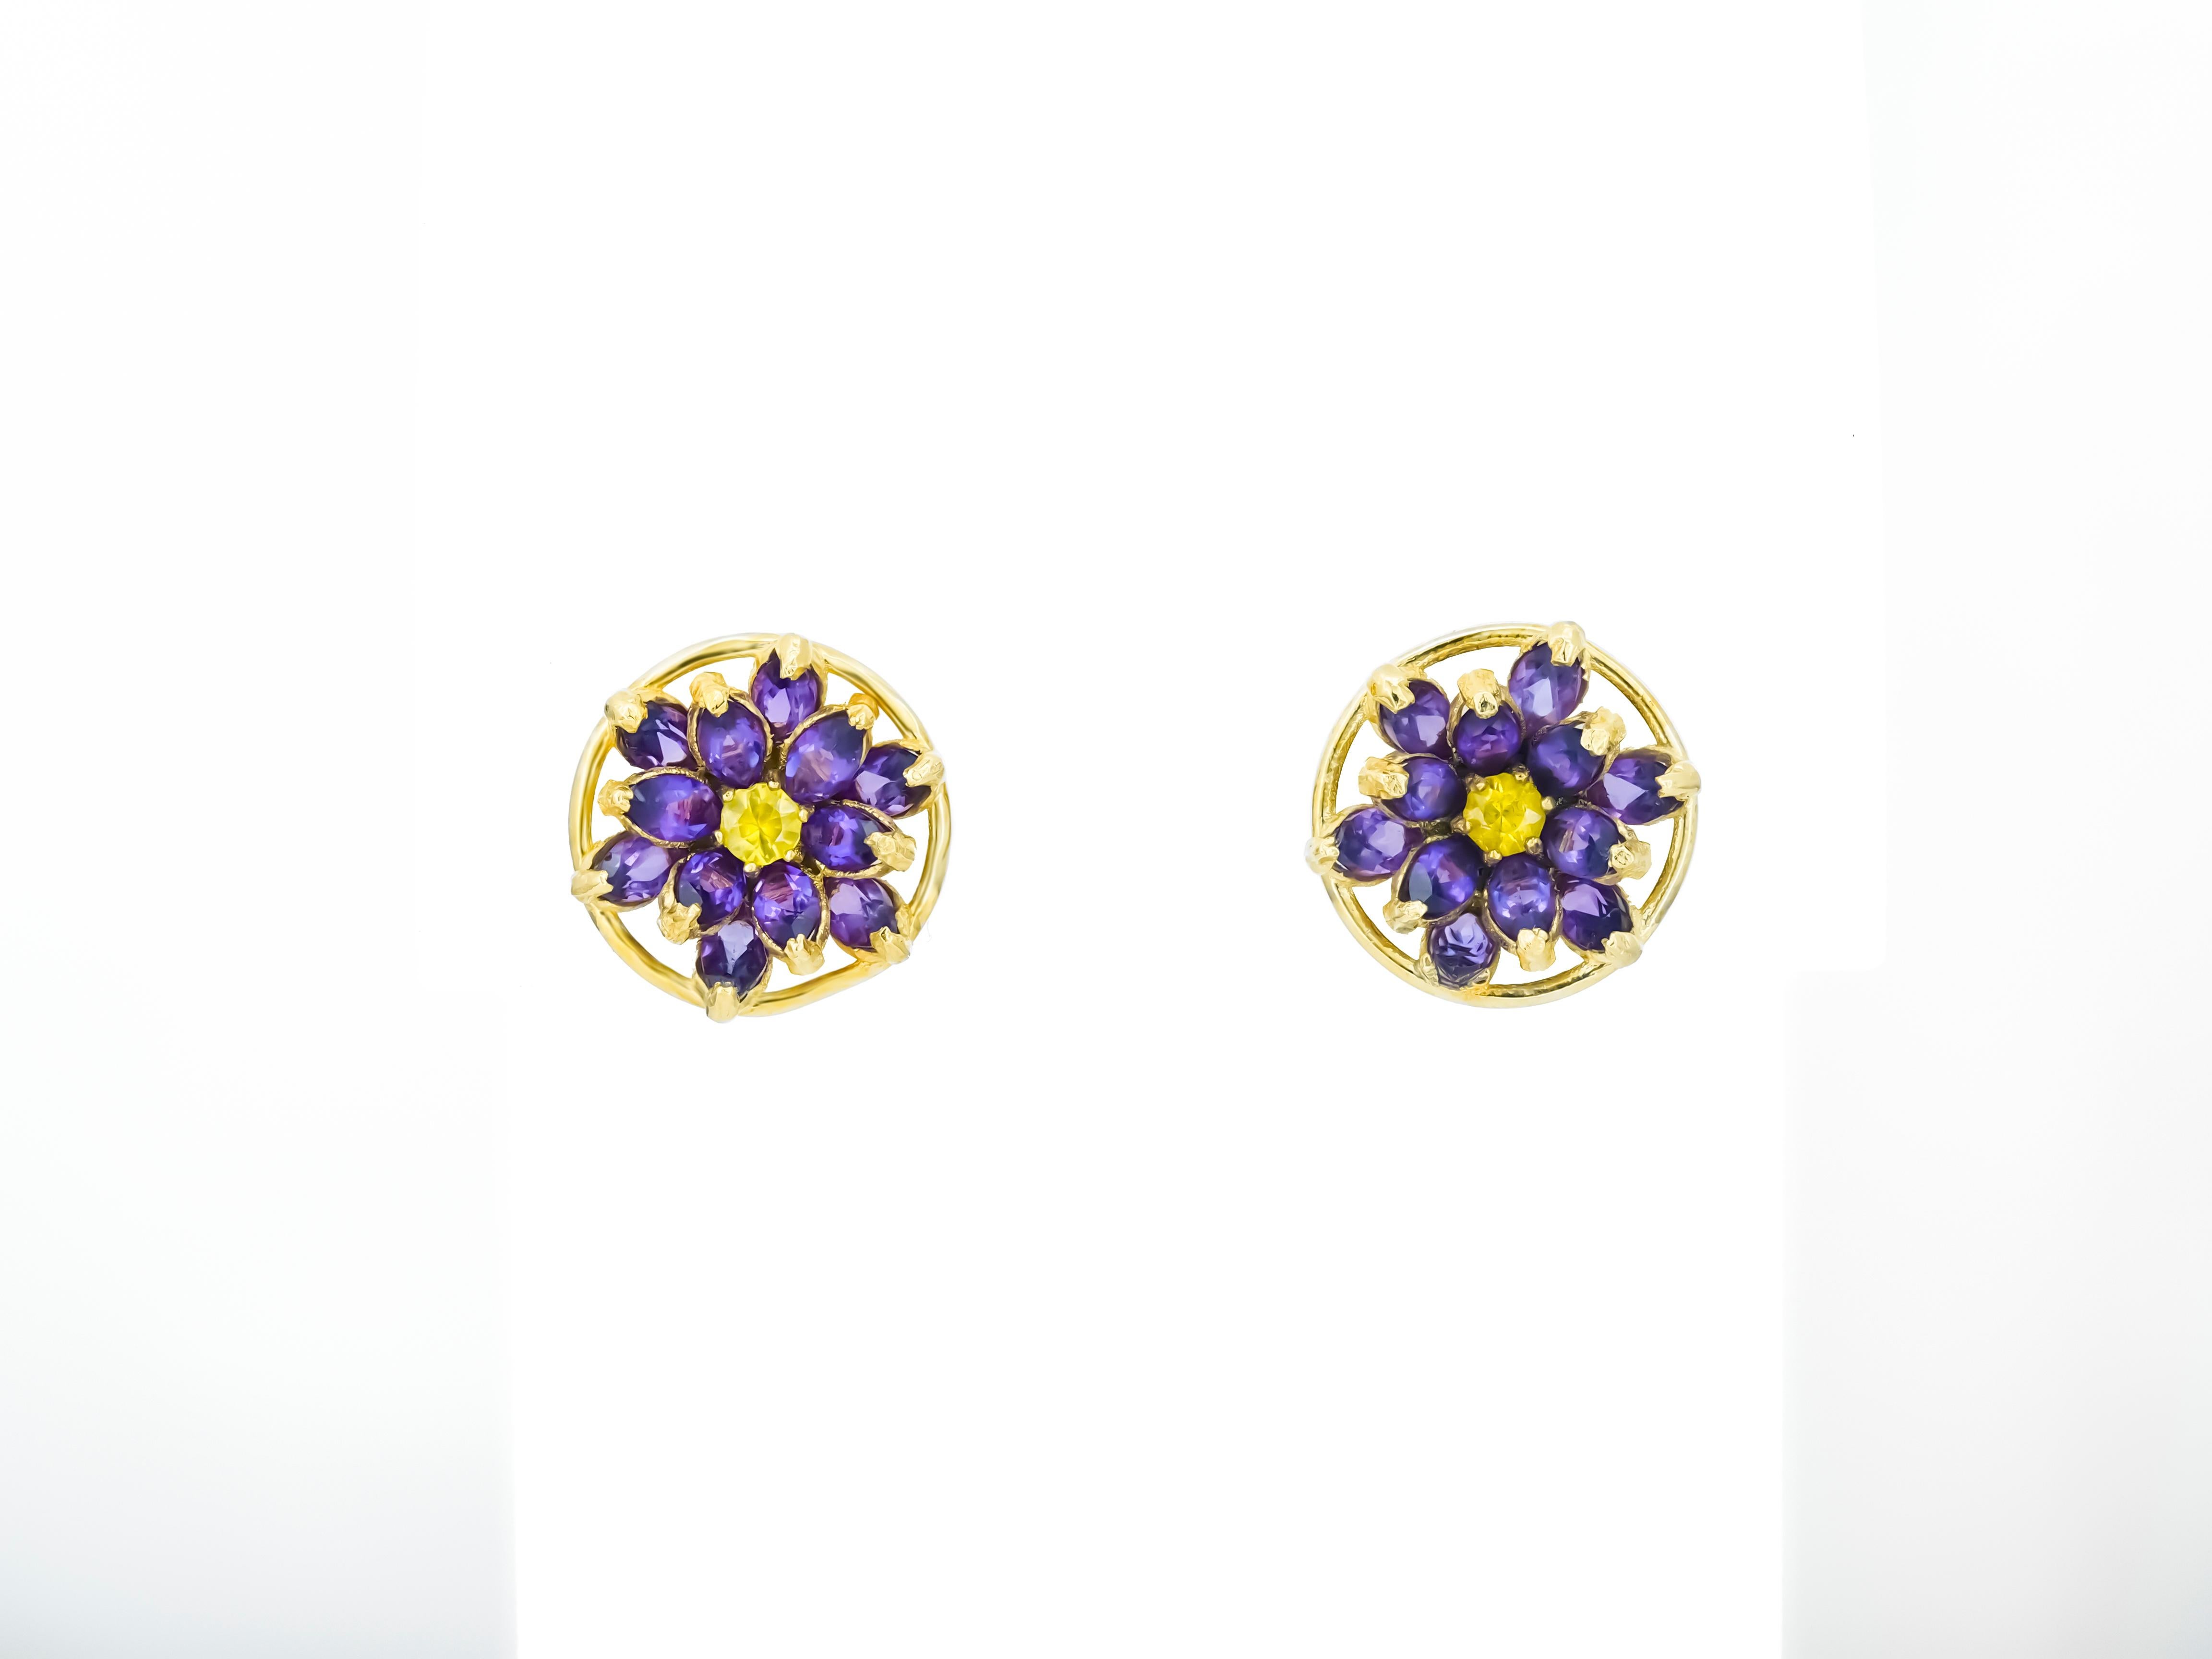 Lotus Flower Earrings Studs in 14k Gold, Amethyst and Sapphires Earrings For Sale 3